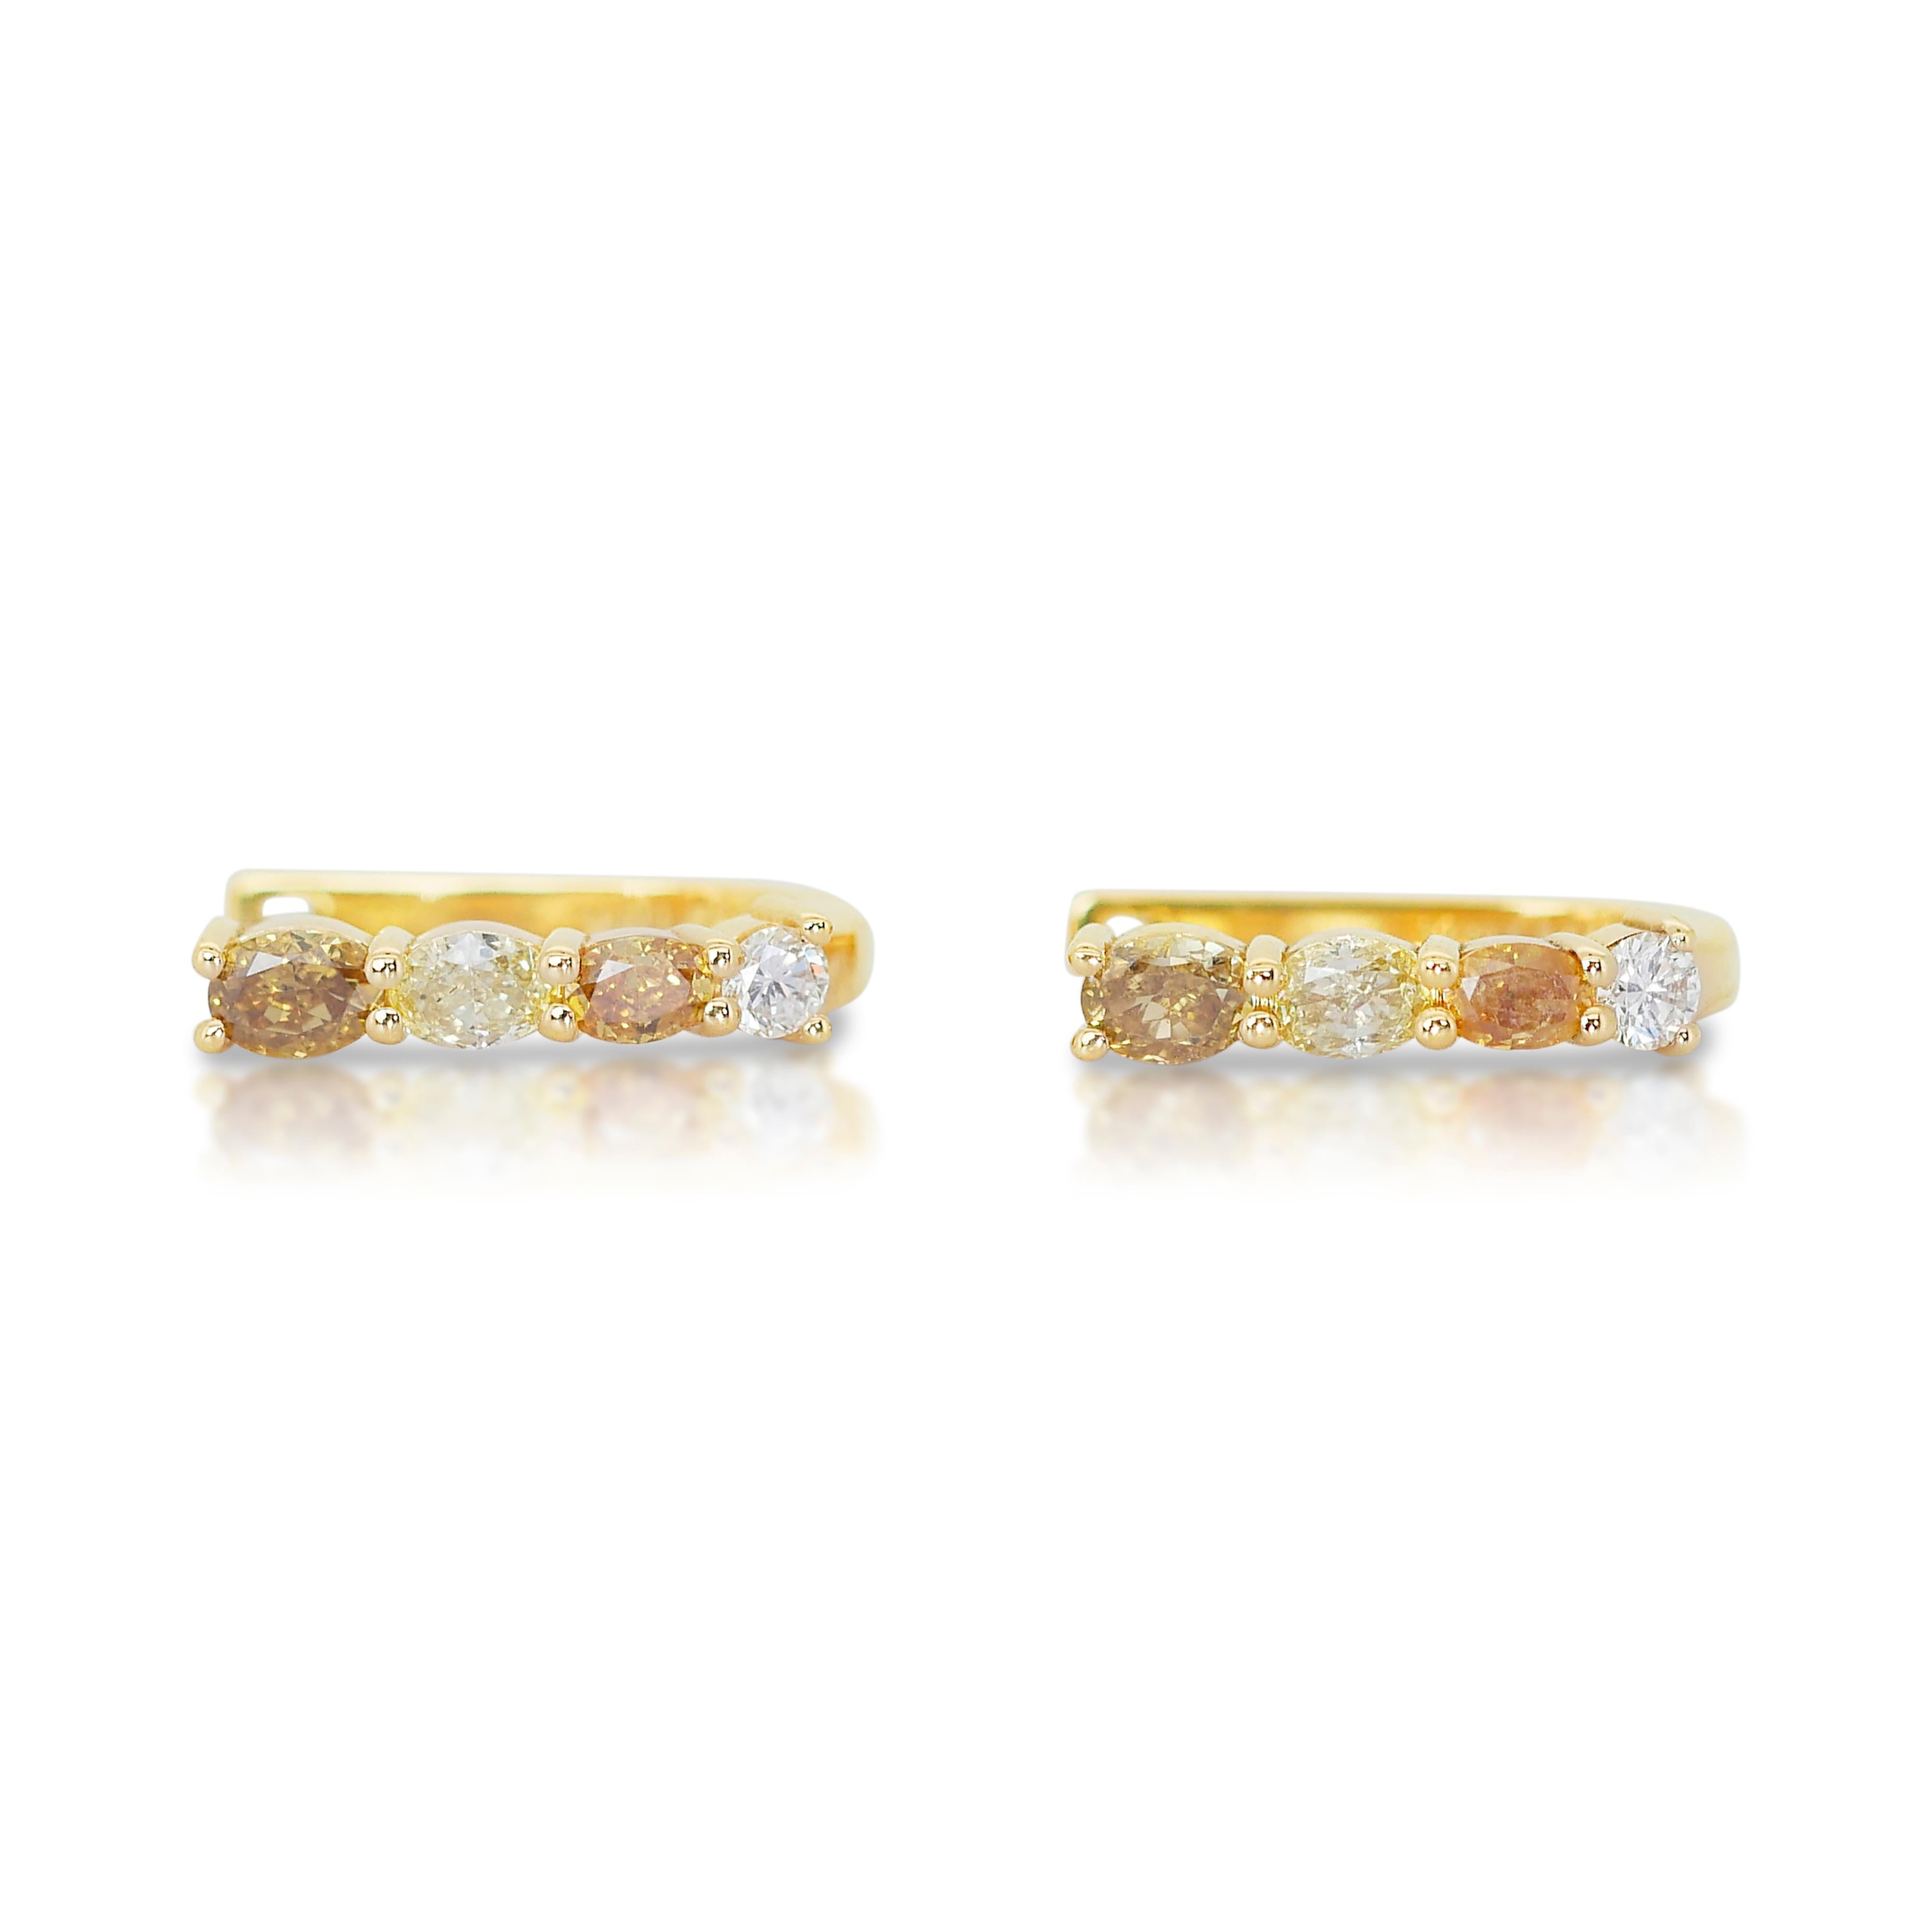 Radiant 1.44 ct Fancy Colored Diamond Earrings in 18k Yellow Gold - IGI  For Sale 1